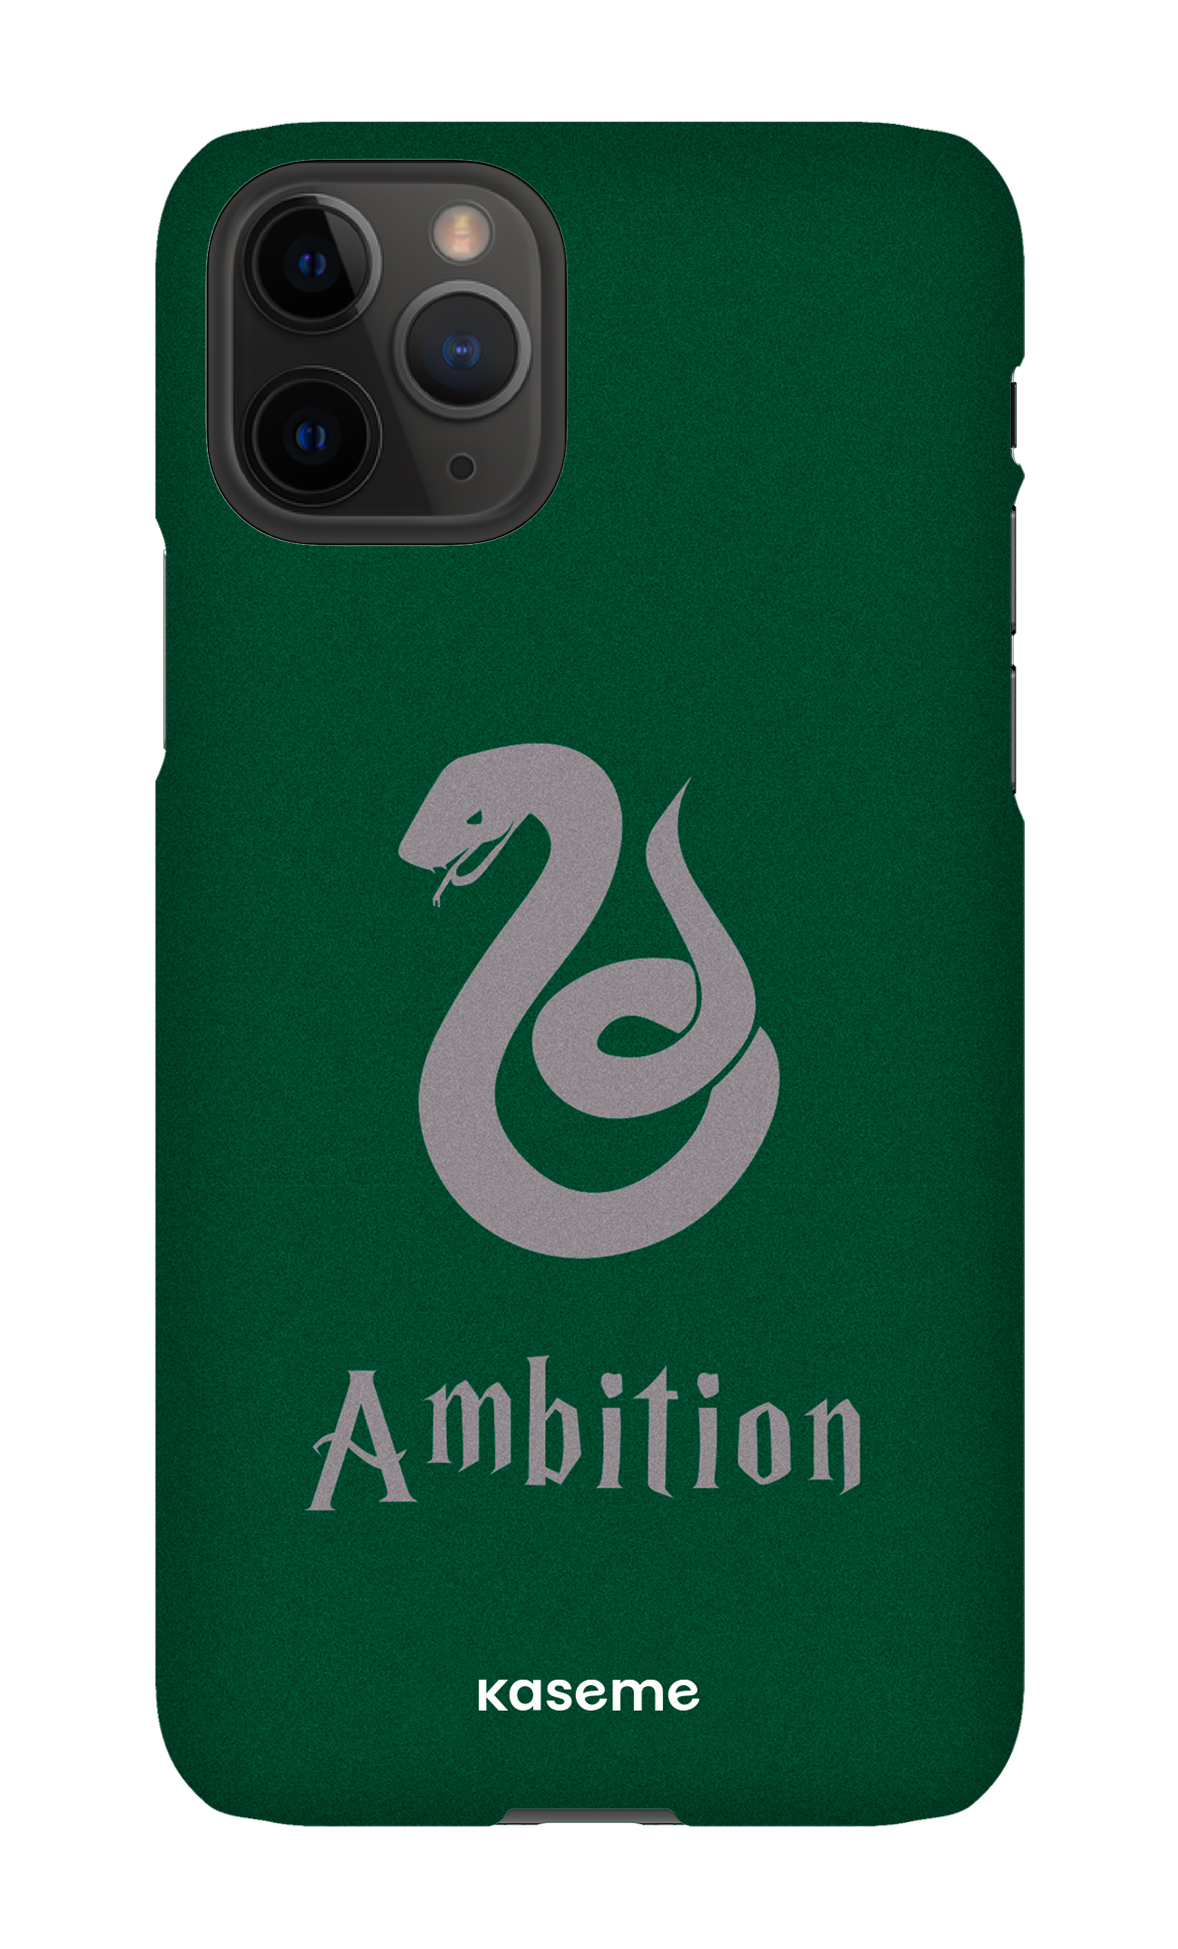 Ambition - iPhone 11 Pro